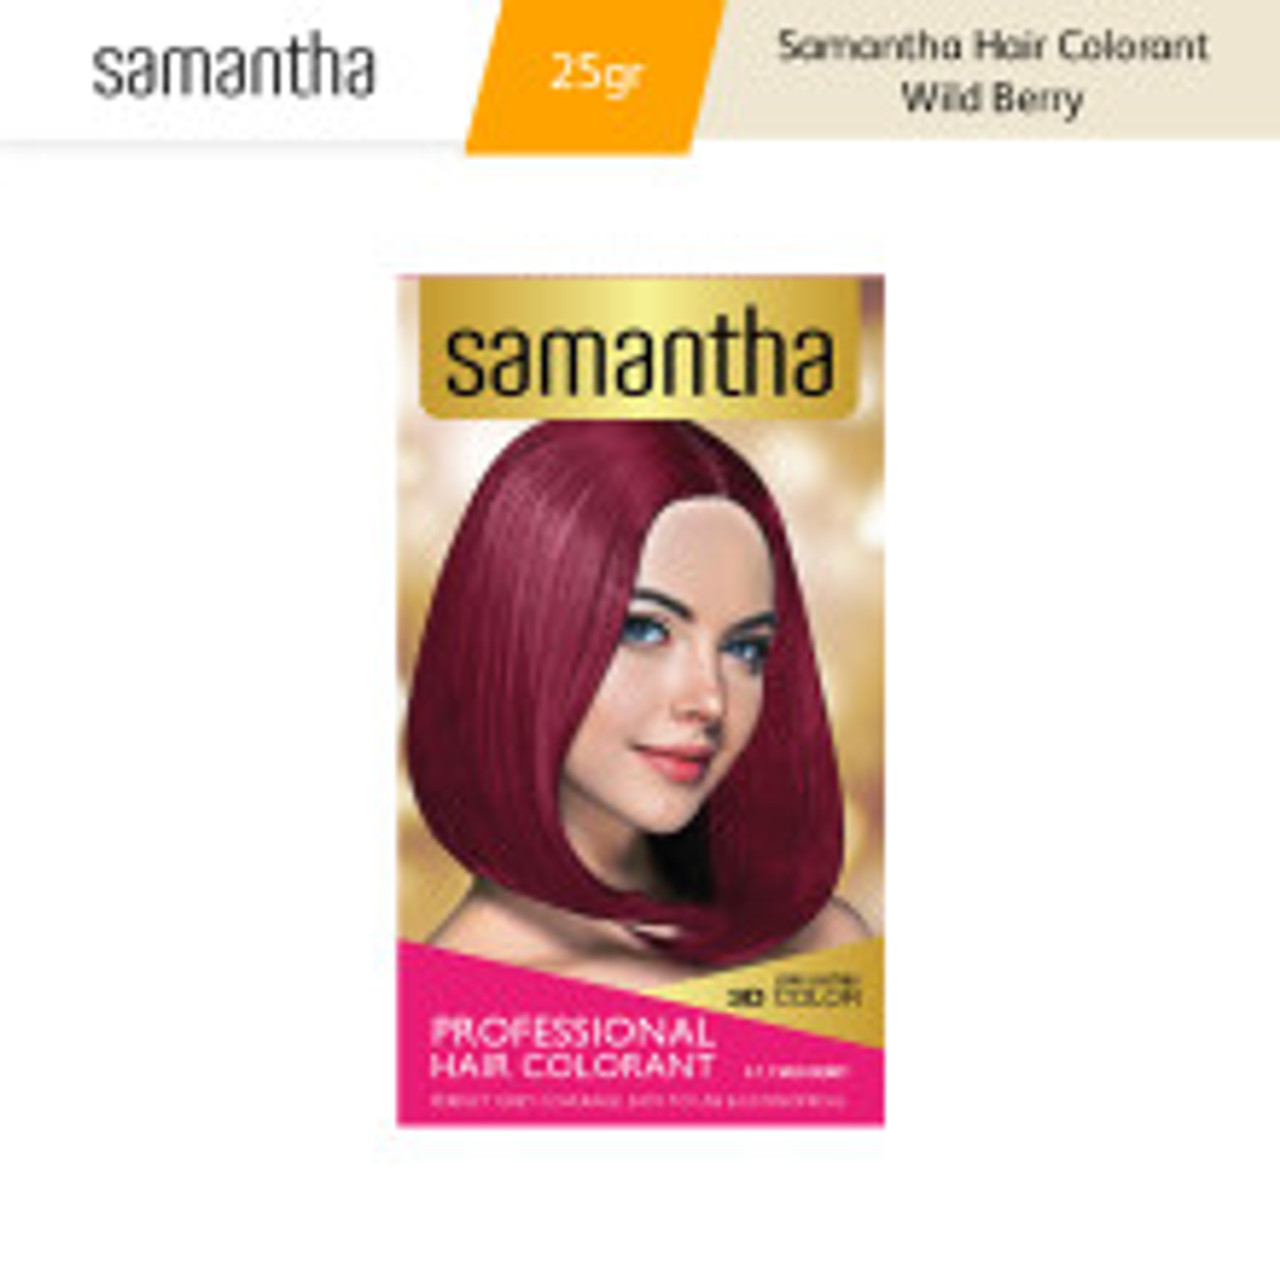 Samantha Hair Colorant Wild Berry Box 25gr